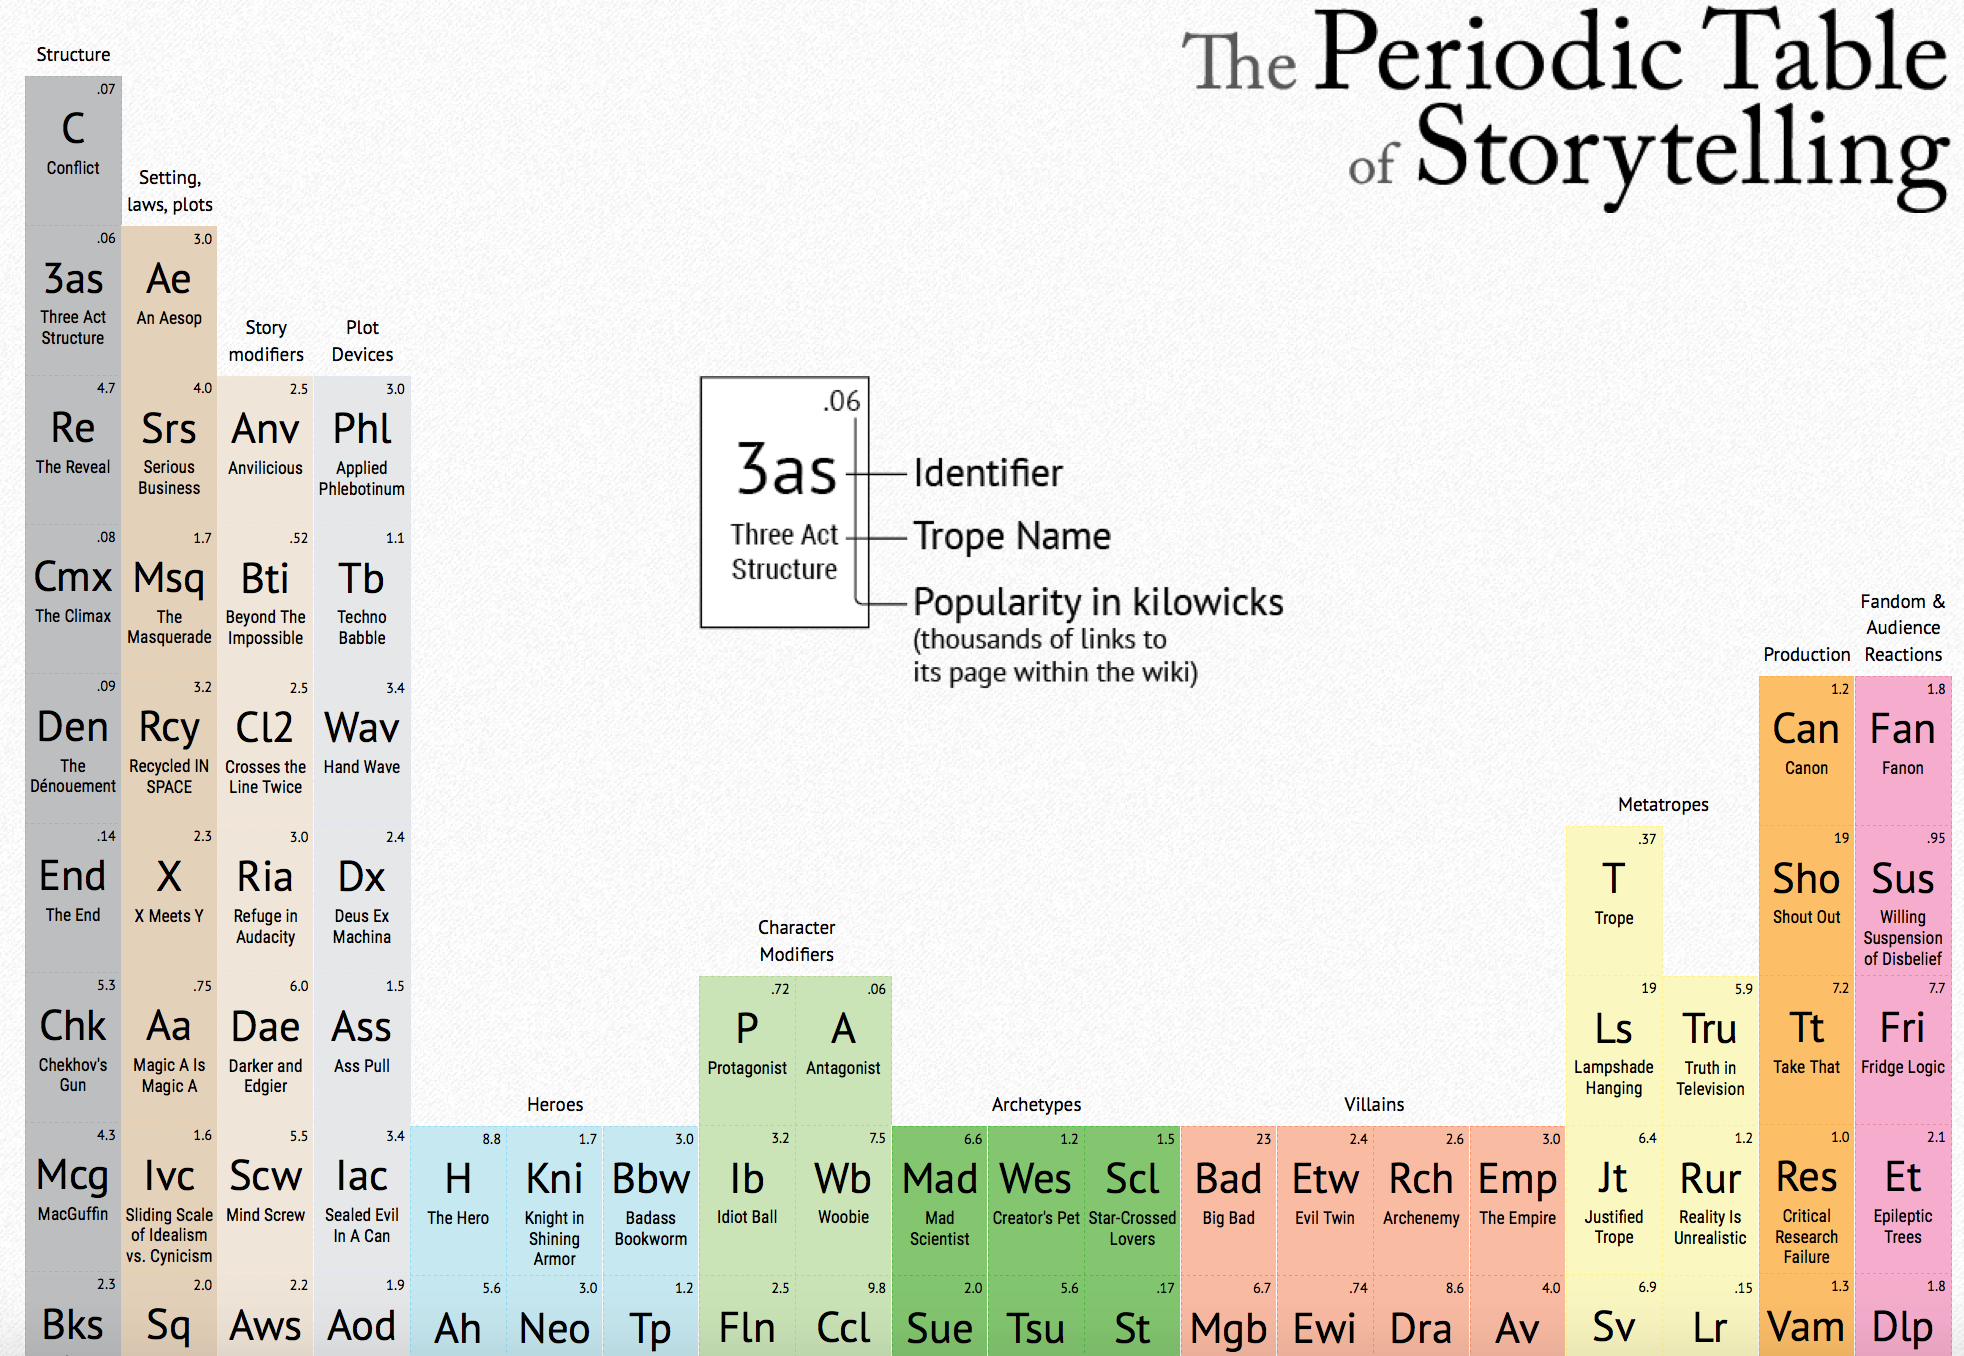 Periodic Tables